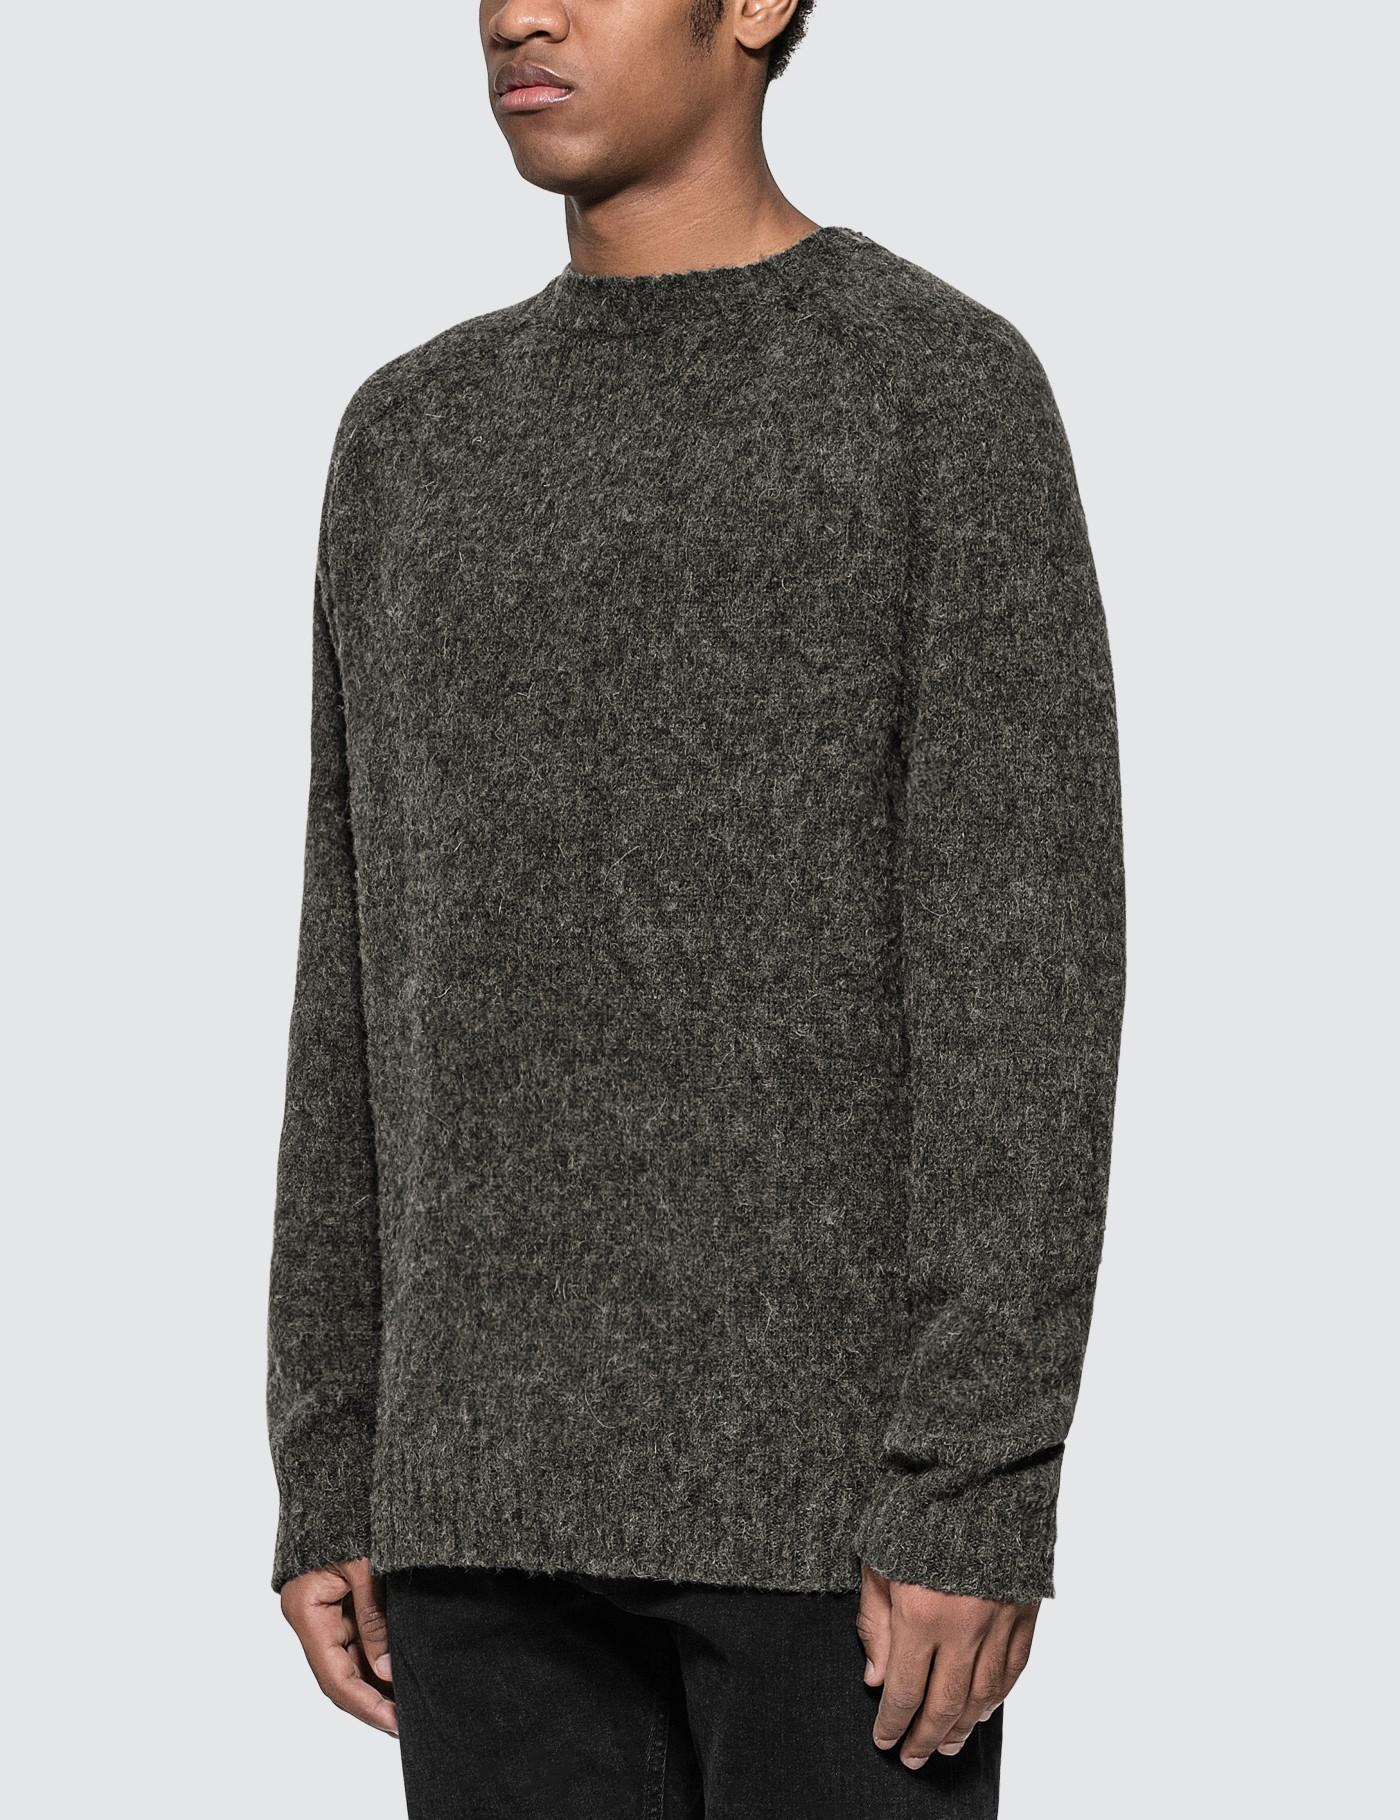 Loewe Wool Melange Sweater in Grey (Gray) for Men - Lyst